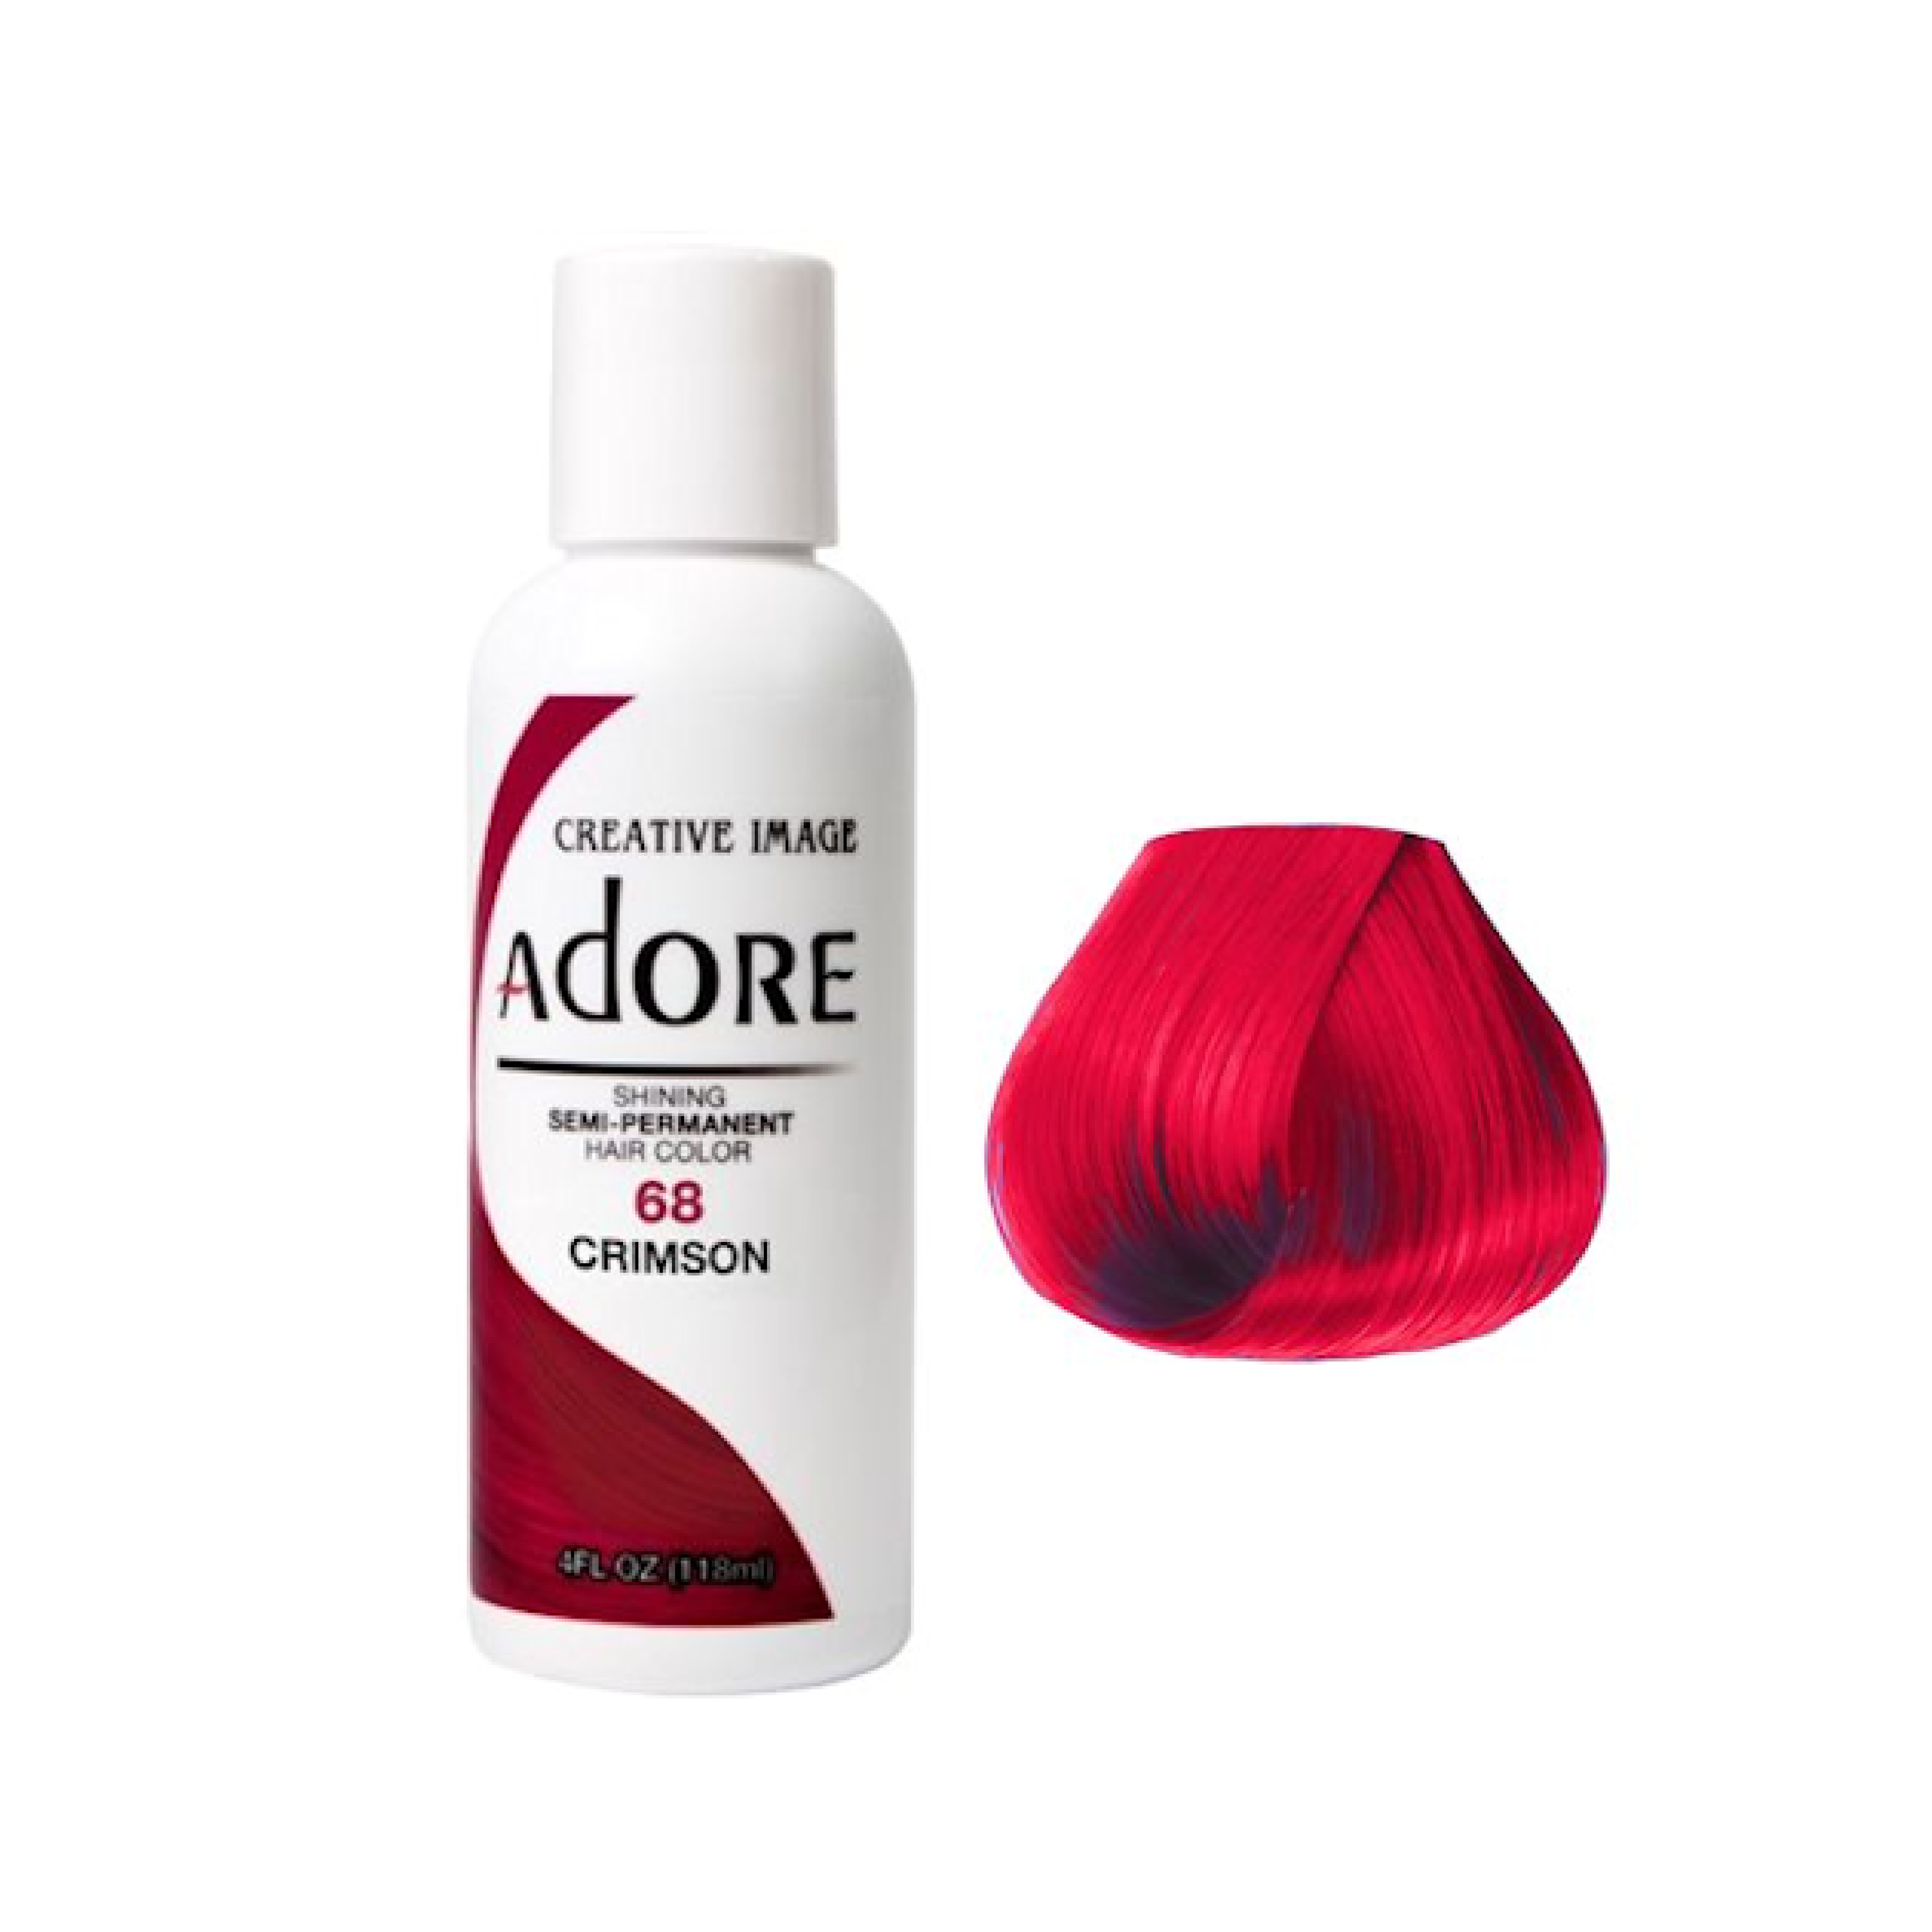 Adore Semi Permanent Crimson Hair Colour 68 - 118ml